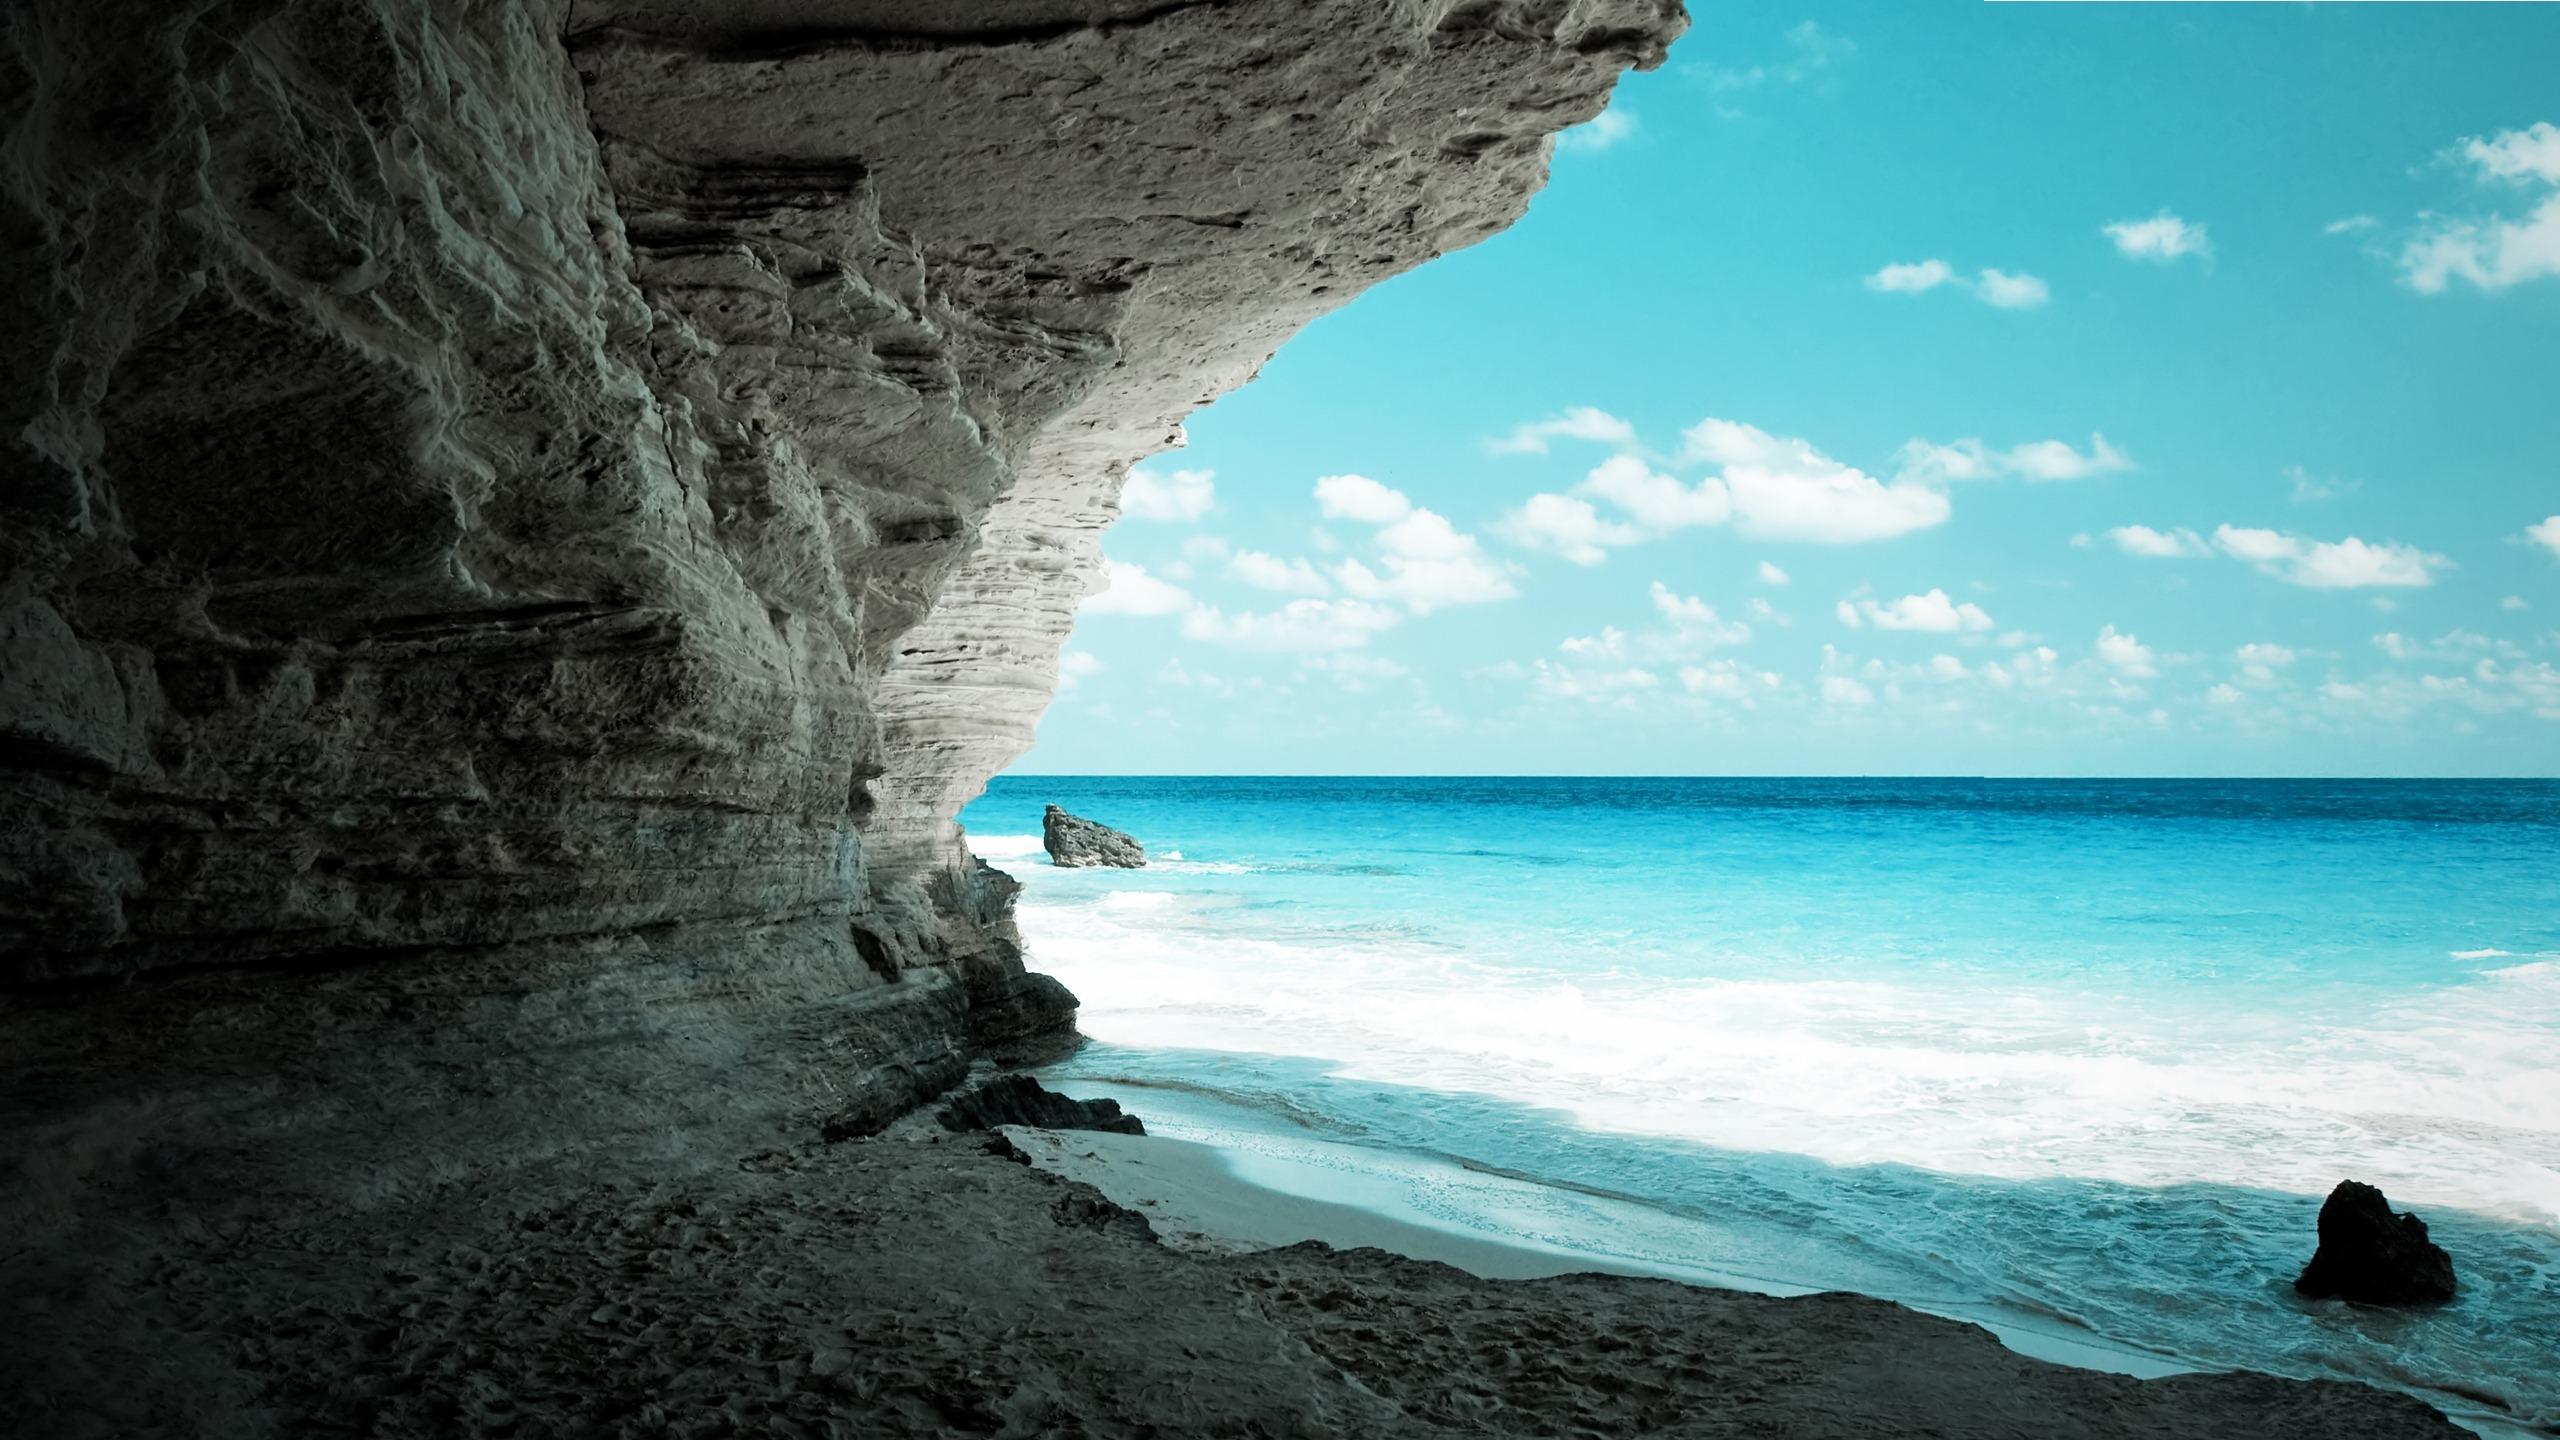 Amazing-beach-desktop-wallpaper-hd-iphone-mac-2560x1440.jpg